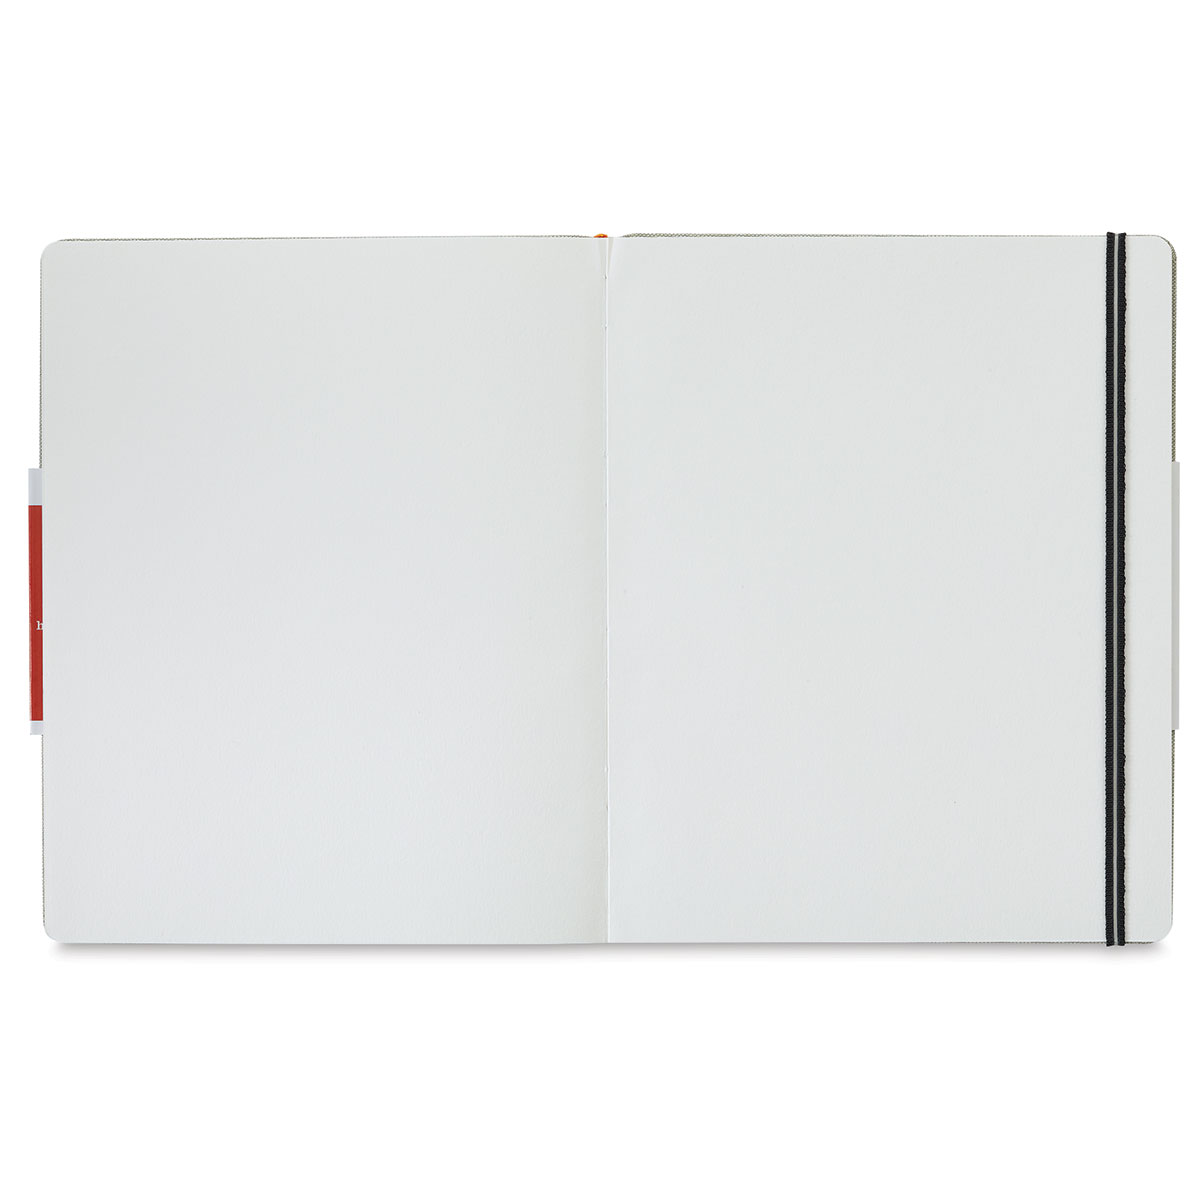 Handbook Journal Co. Artist Watercolor Sketchbook Journal, Large Landscape  5.25 x 8.25 Inches, 140lb / 300 GSM, Hardcover w/Pocket